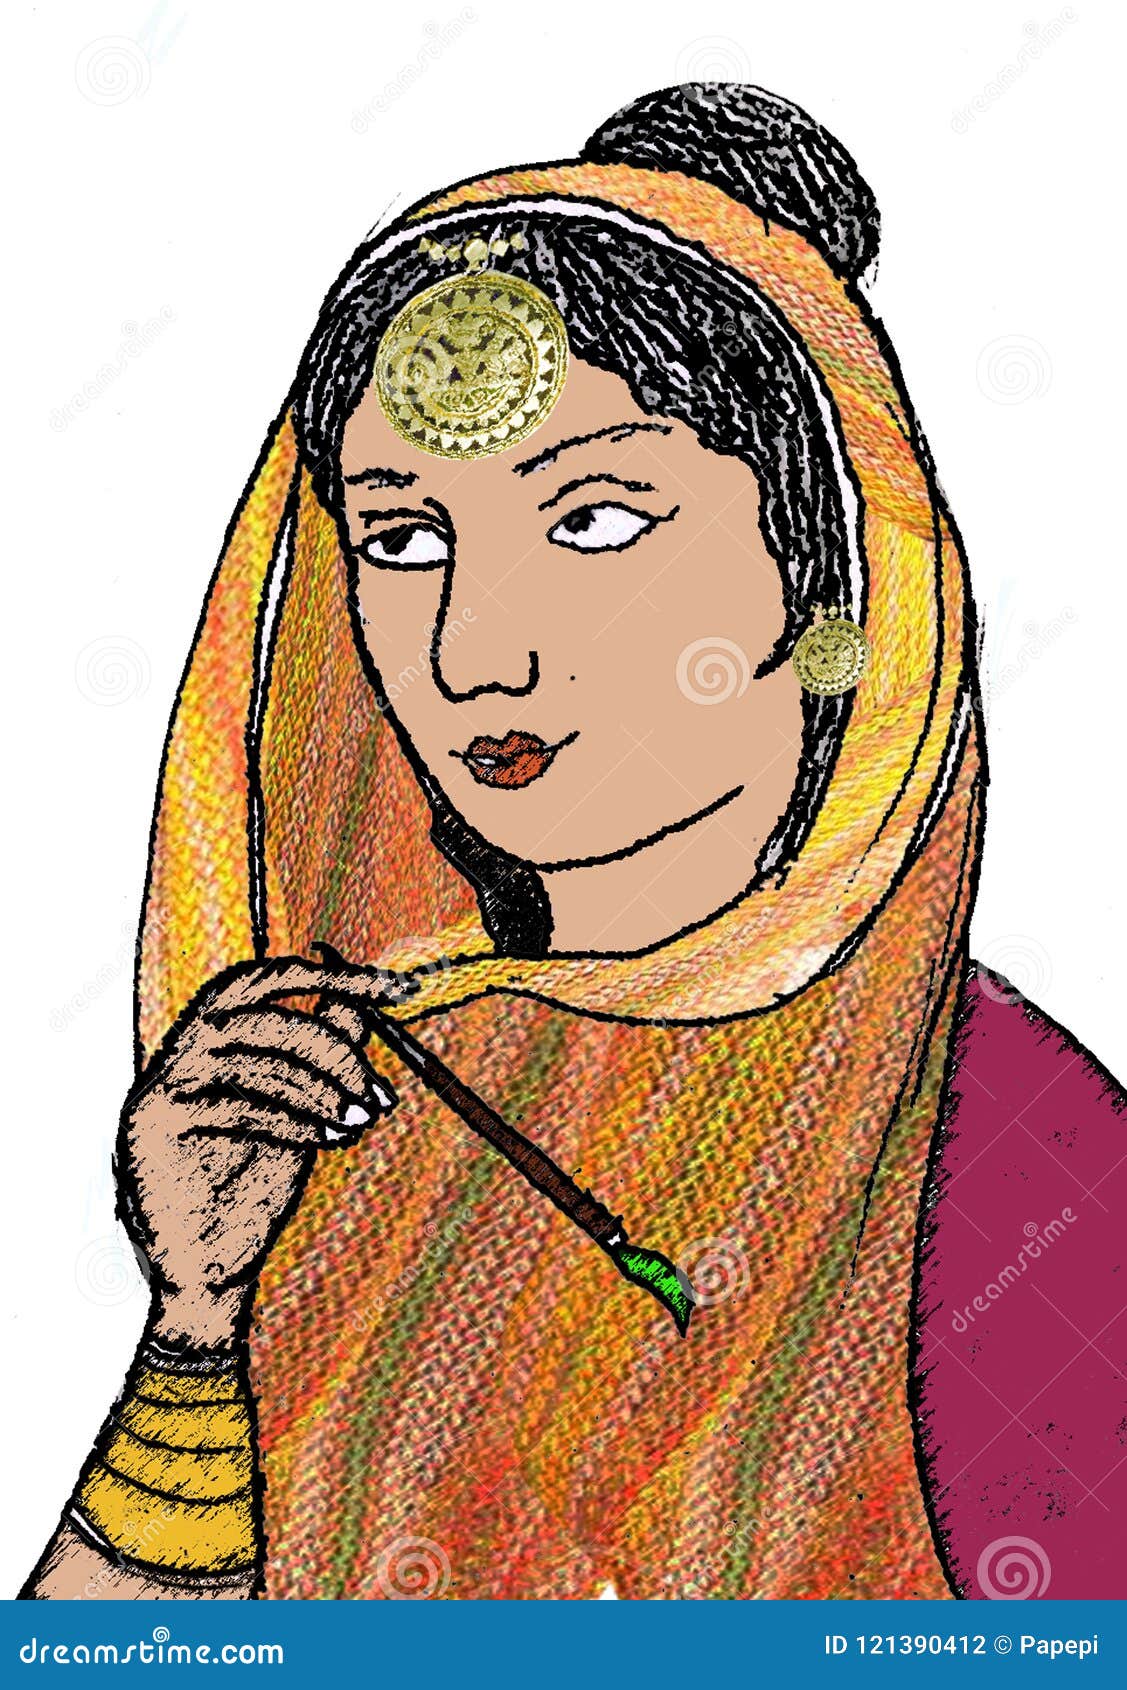 shoni protagonist of popular tragic romances of punjab